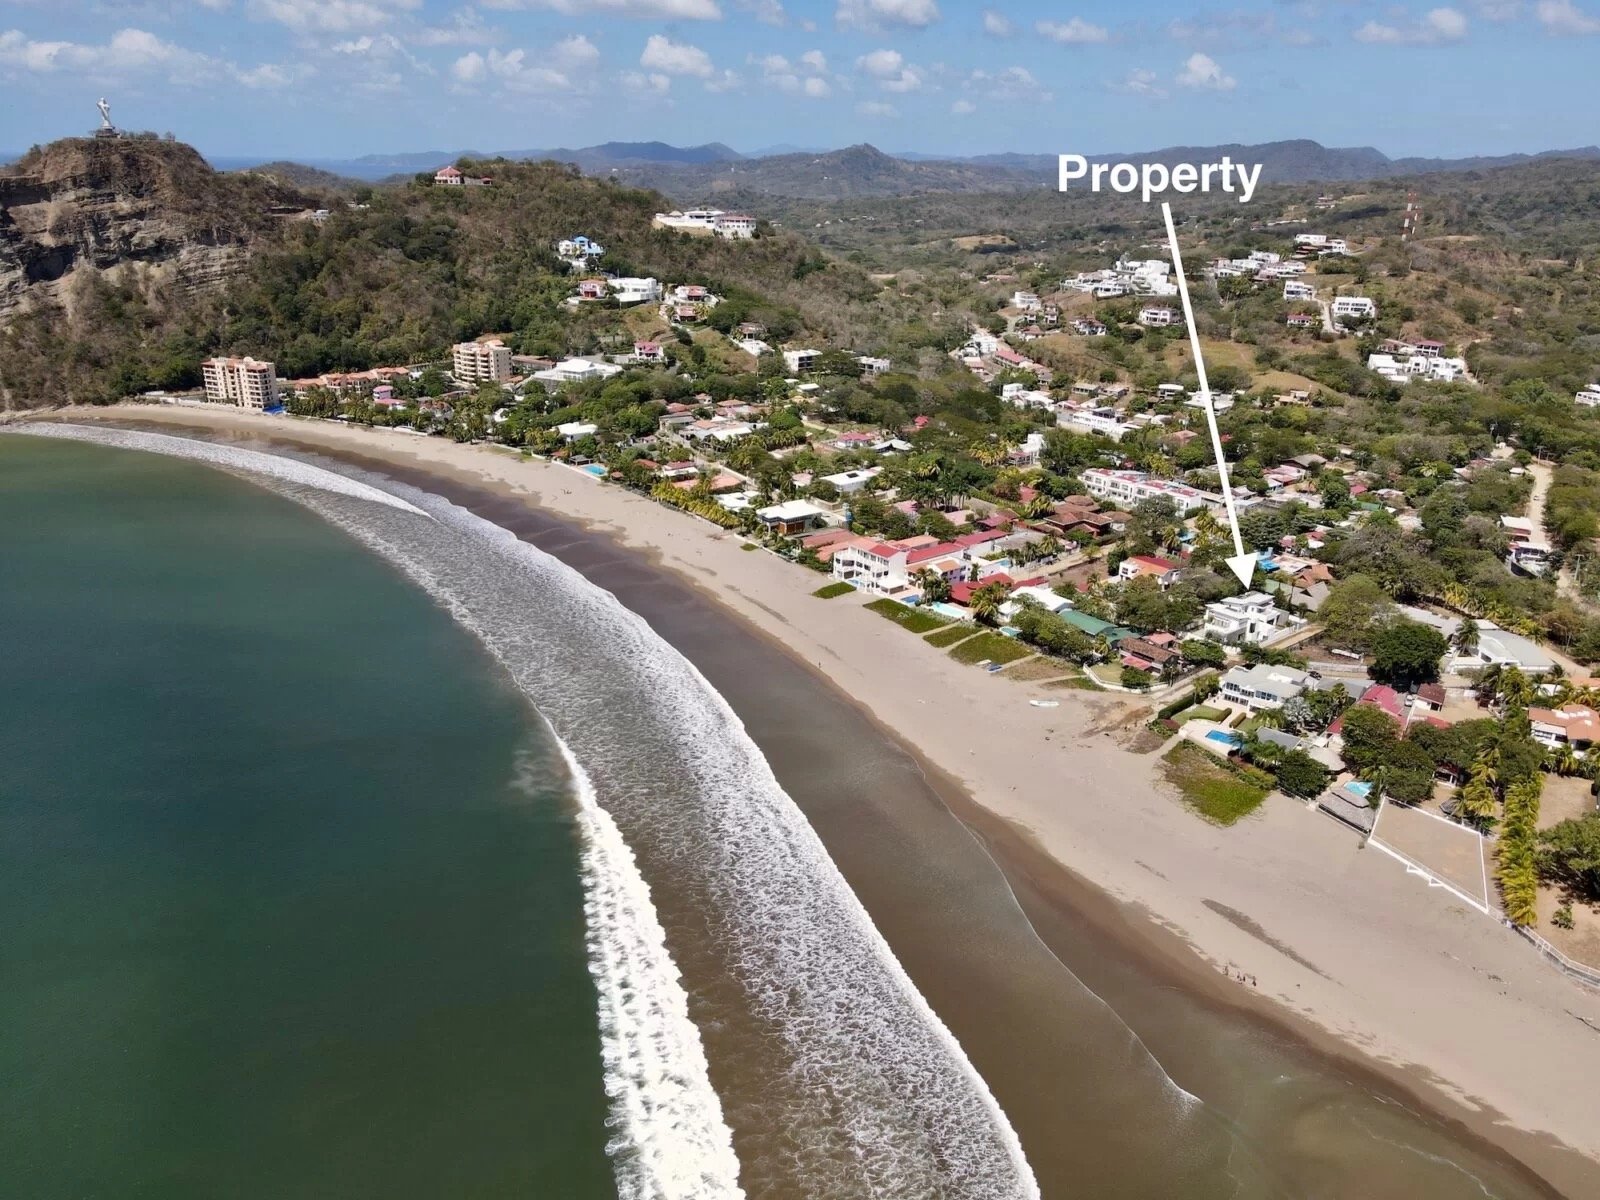 Beach Home House Property For Sale San Juan Del Sur Nicaragua Ocean View Luxury Real Estate 2.jpeg.jpeg